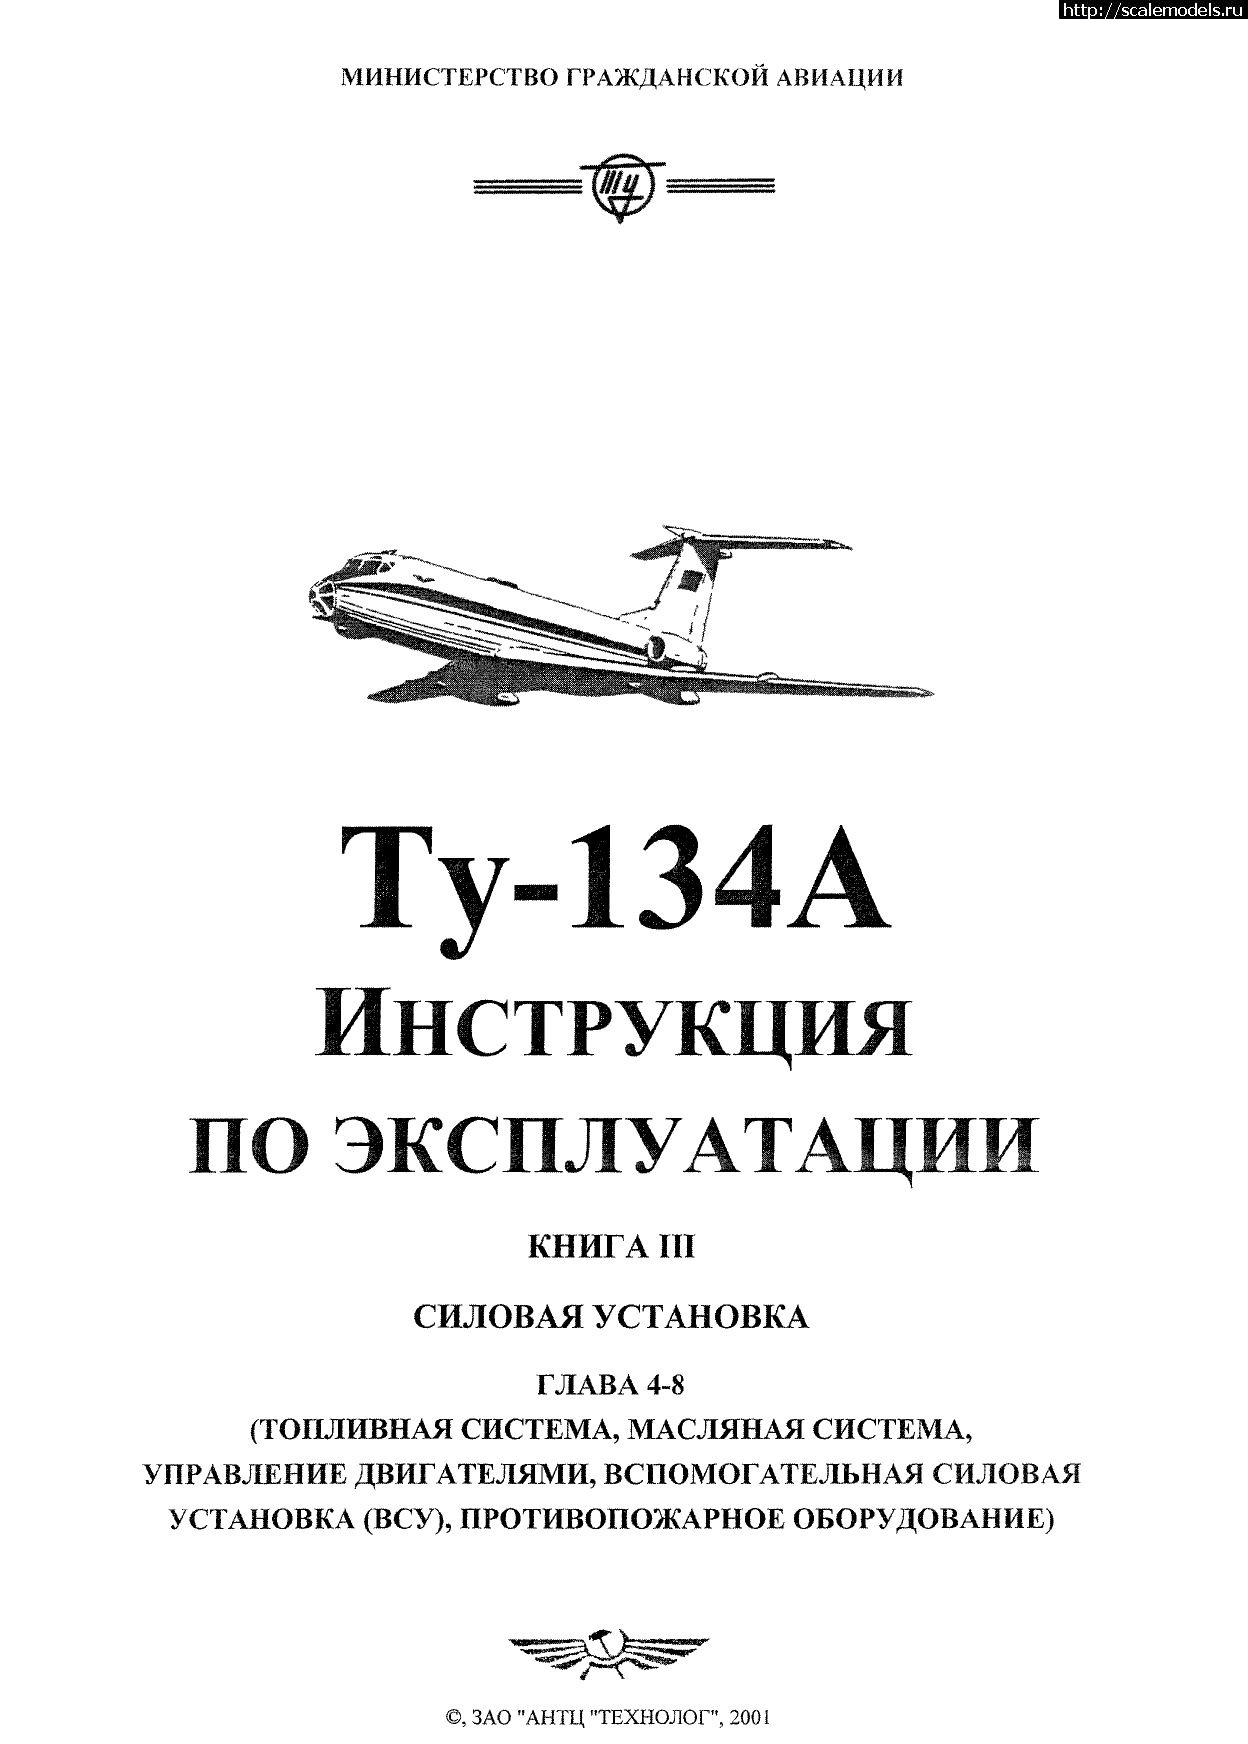 1708399765_Tu-134_IYE_kn3_ch2_001.jpg : -134   .  3,  2. (Tu-134A Operating Instructions. B. 3, P. 2)  